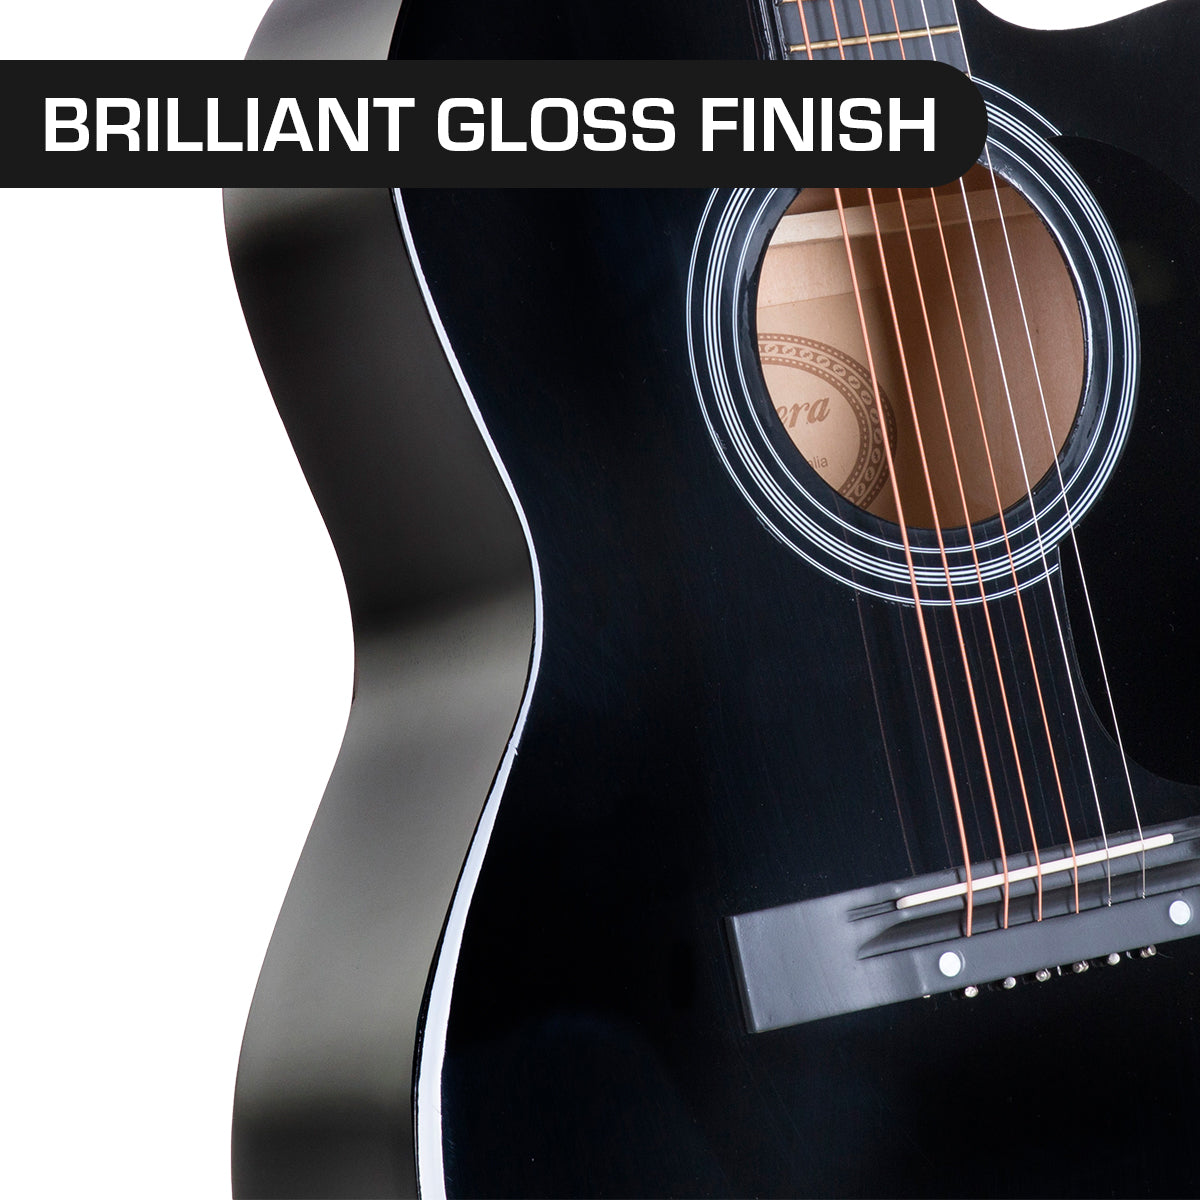 Acoustic Cutaway 40in Guitar - Black